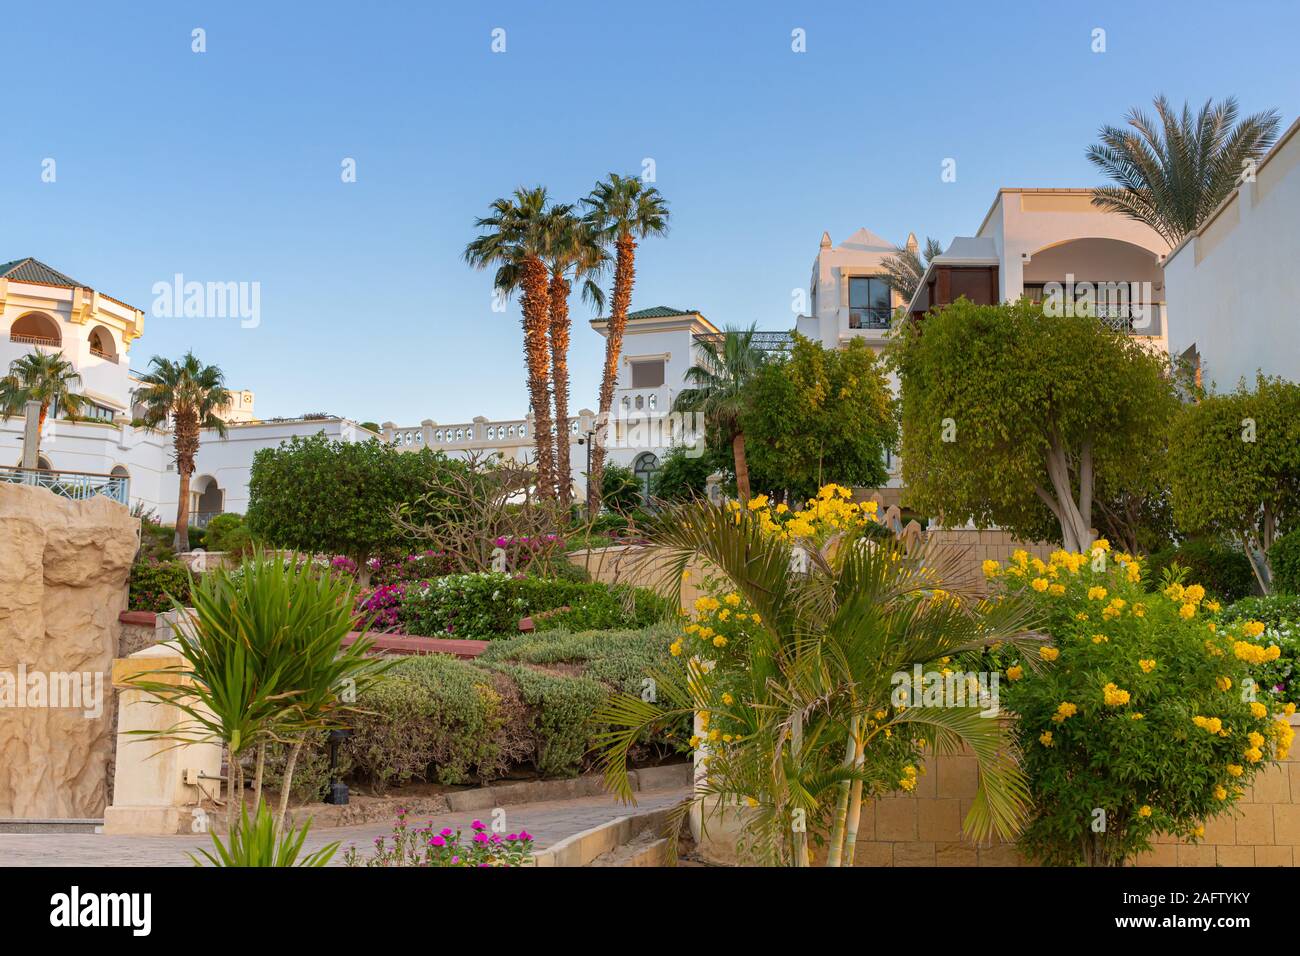 Sharm El Sheikh, Egypt - 11.03.2019: Hyatt Regency Sharm El Sheikh Resort. Exotic greens, resort apartments. Eastern architecture at dawn. Stock Photo